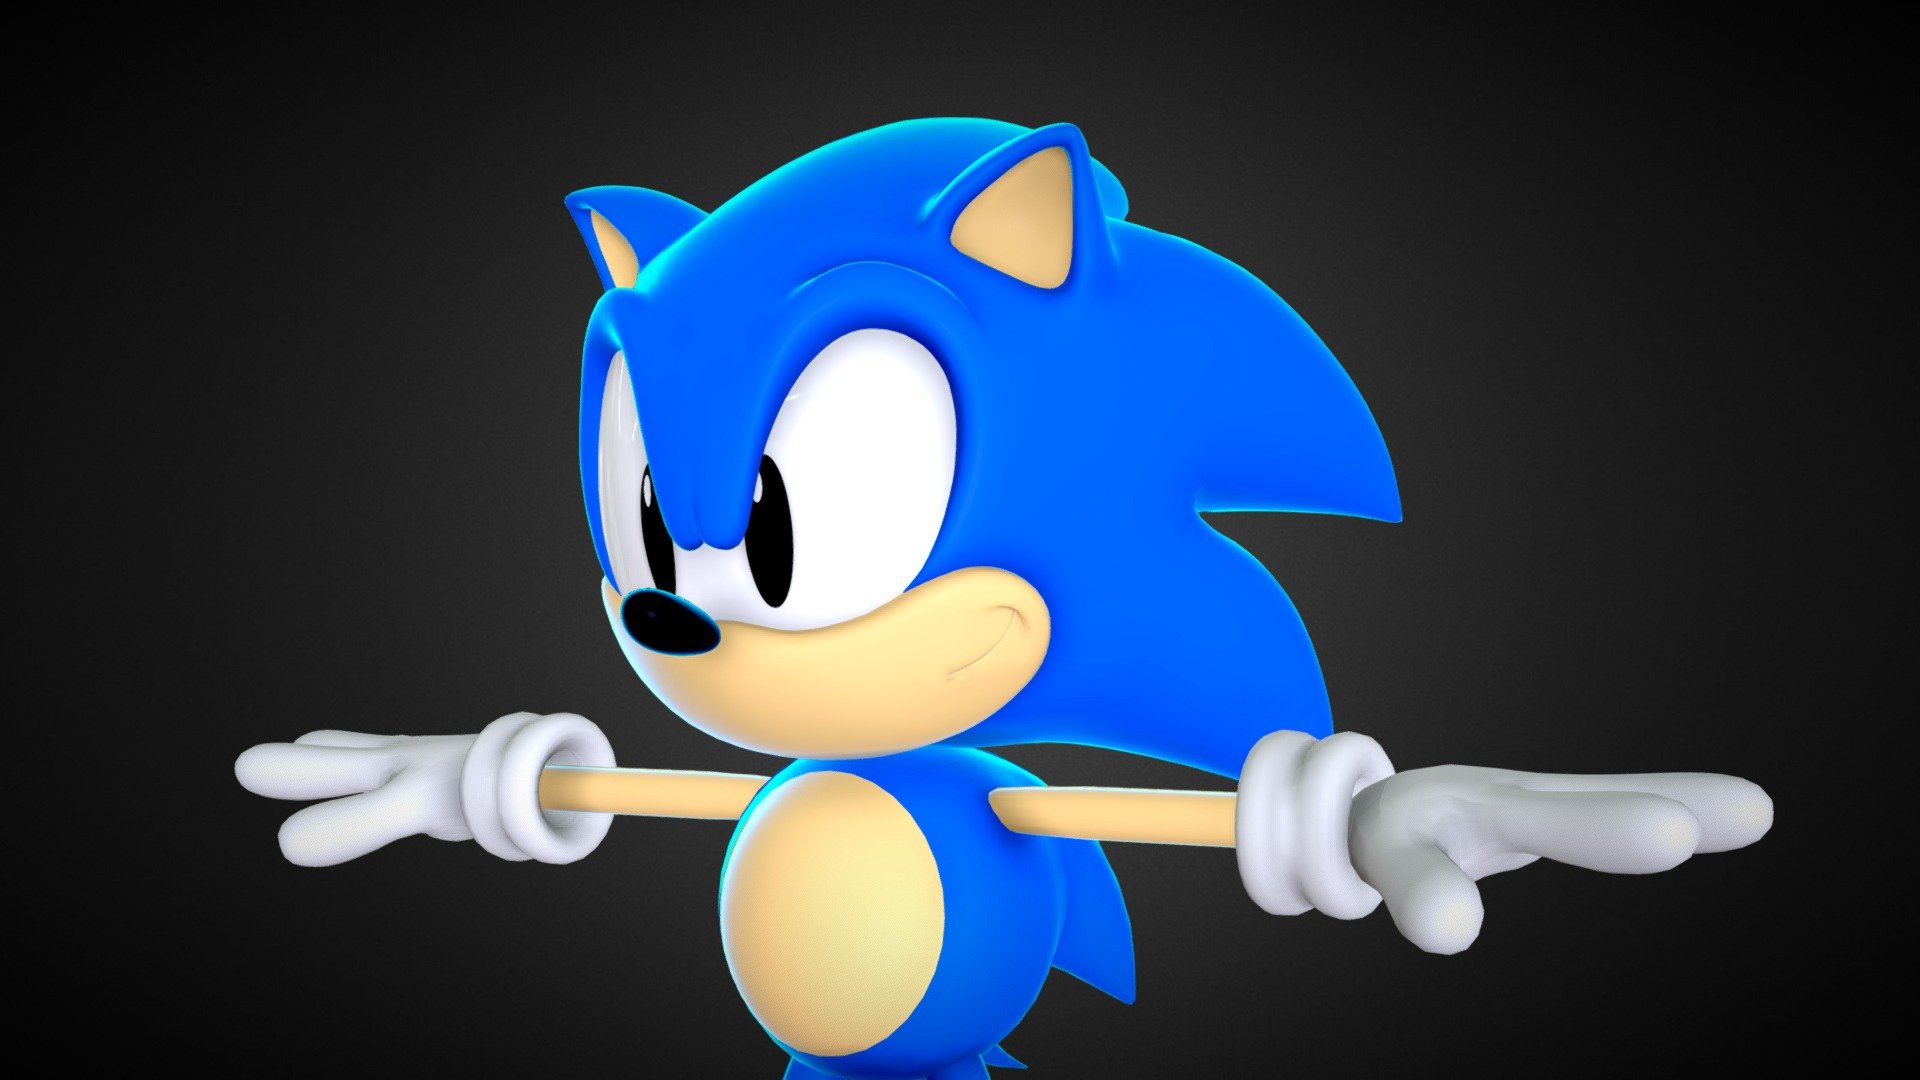 Marza Classic Sonic Model [Sonic Origins] [Mods]